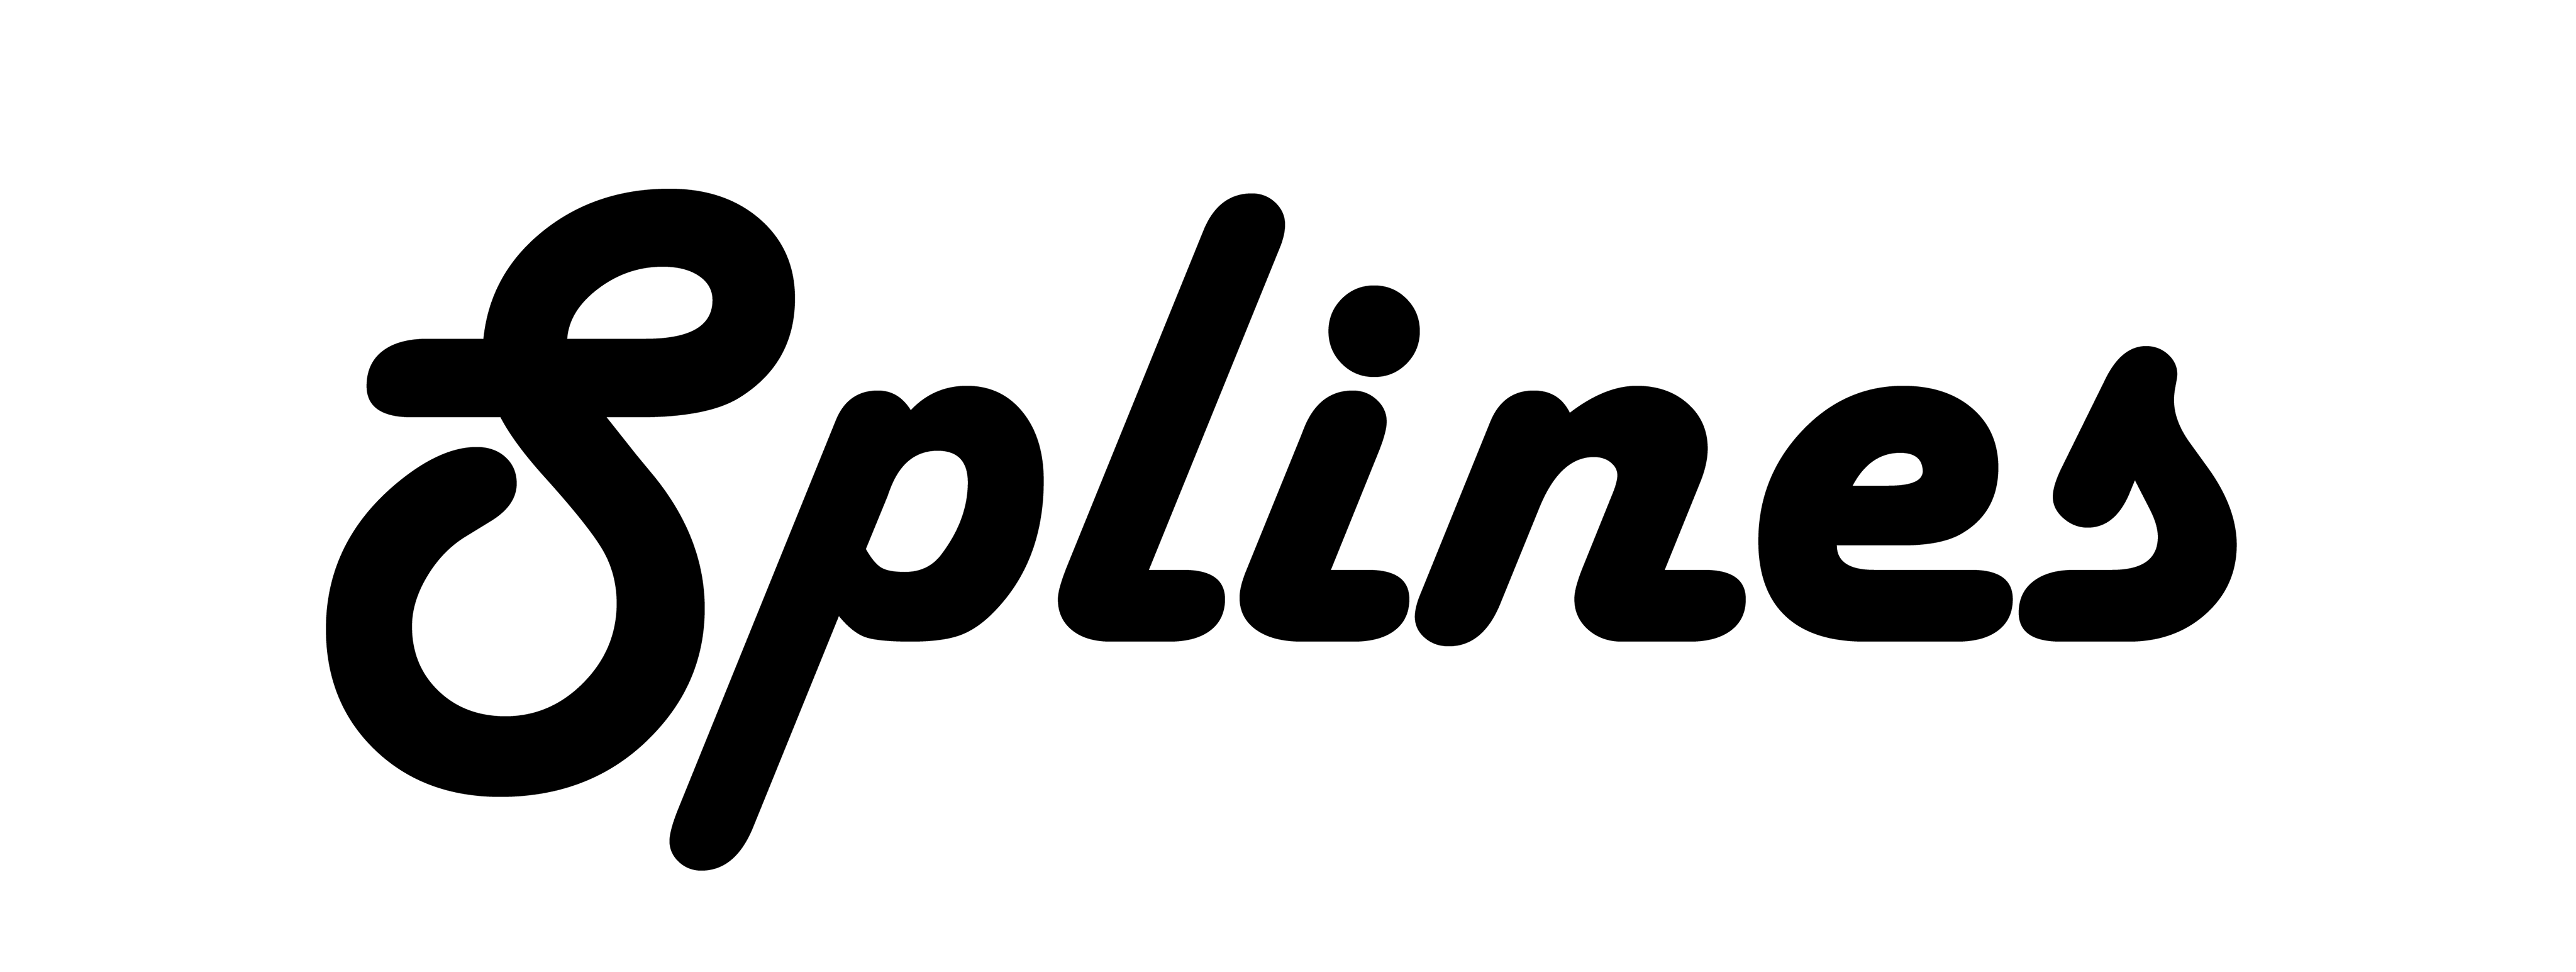 Splines Logo